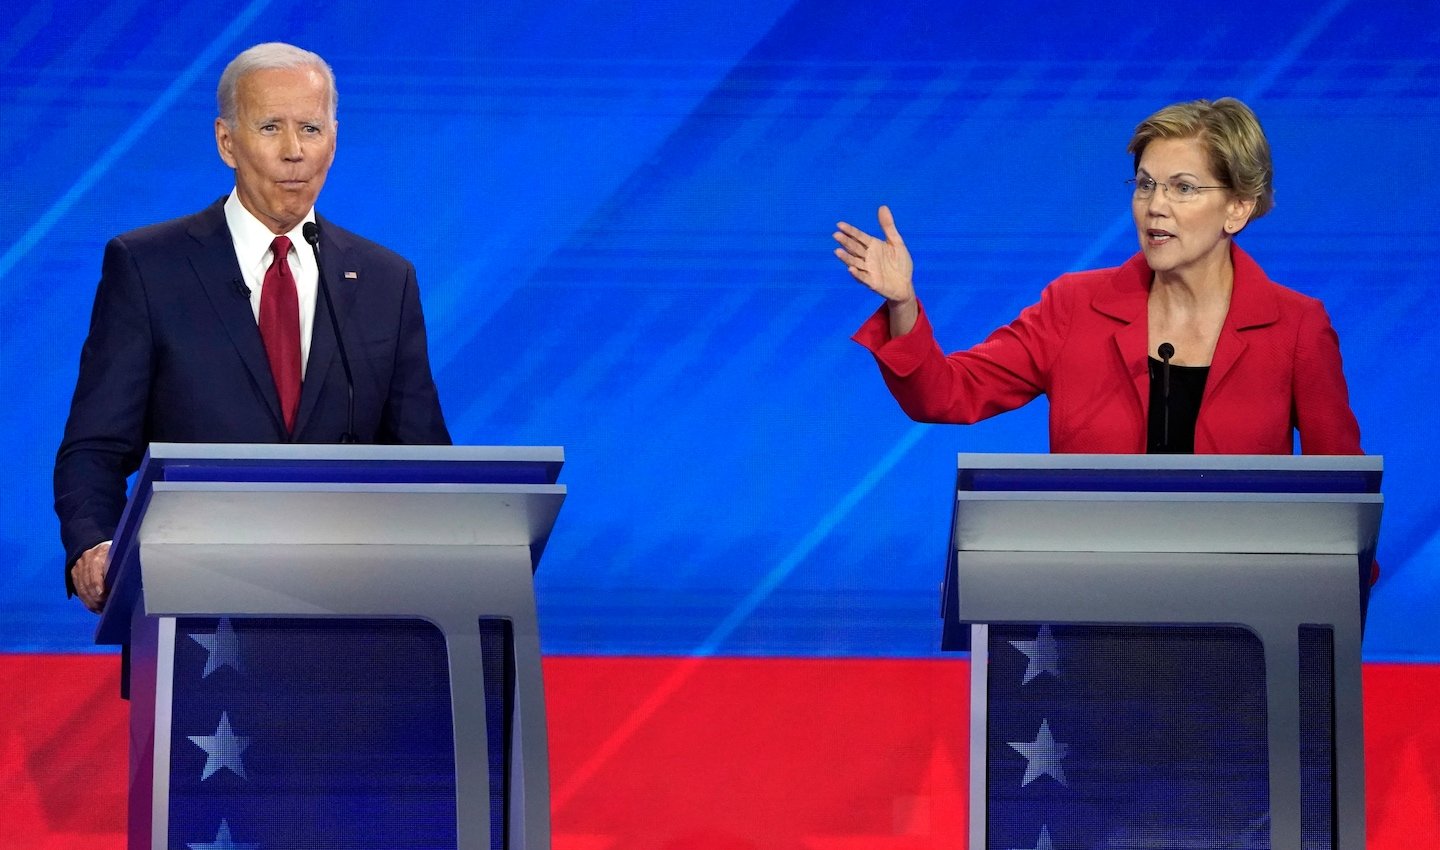 Fact-checking the third Democratic presidential debate